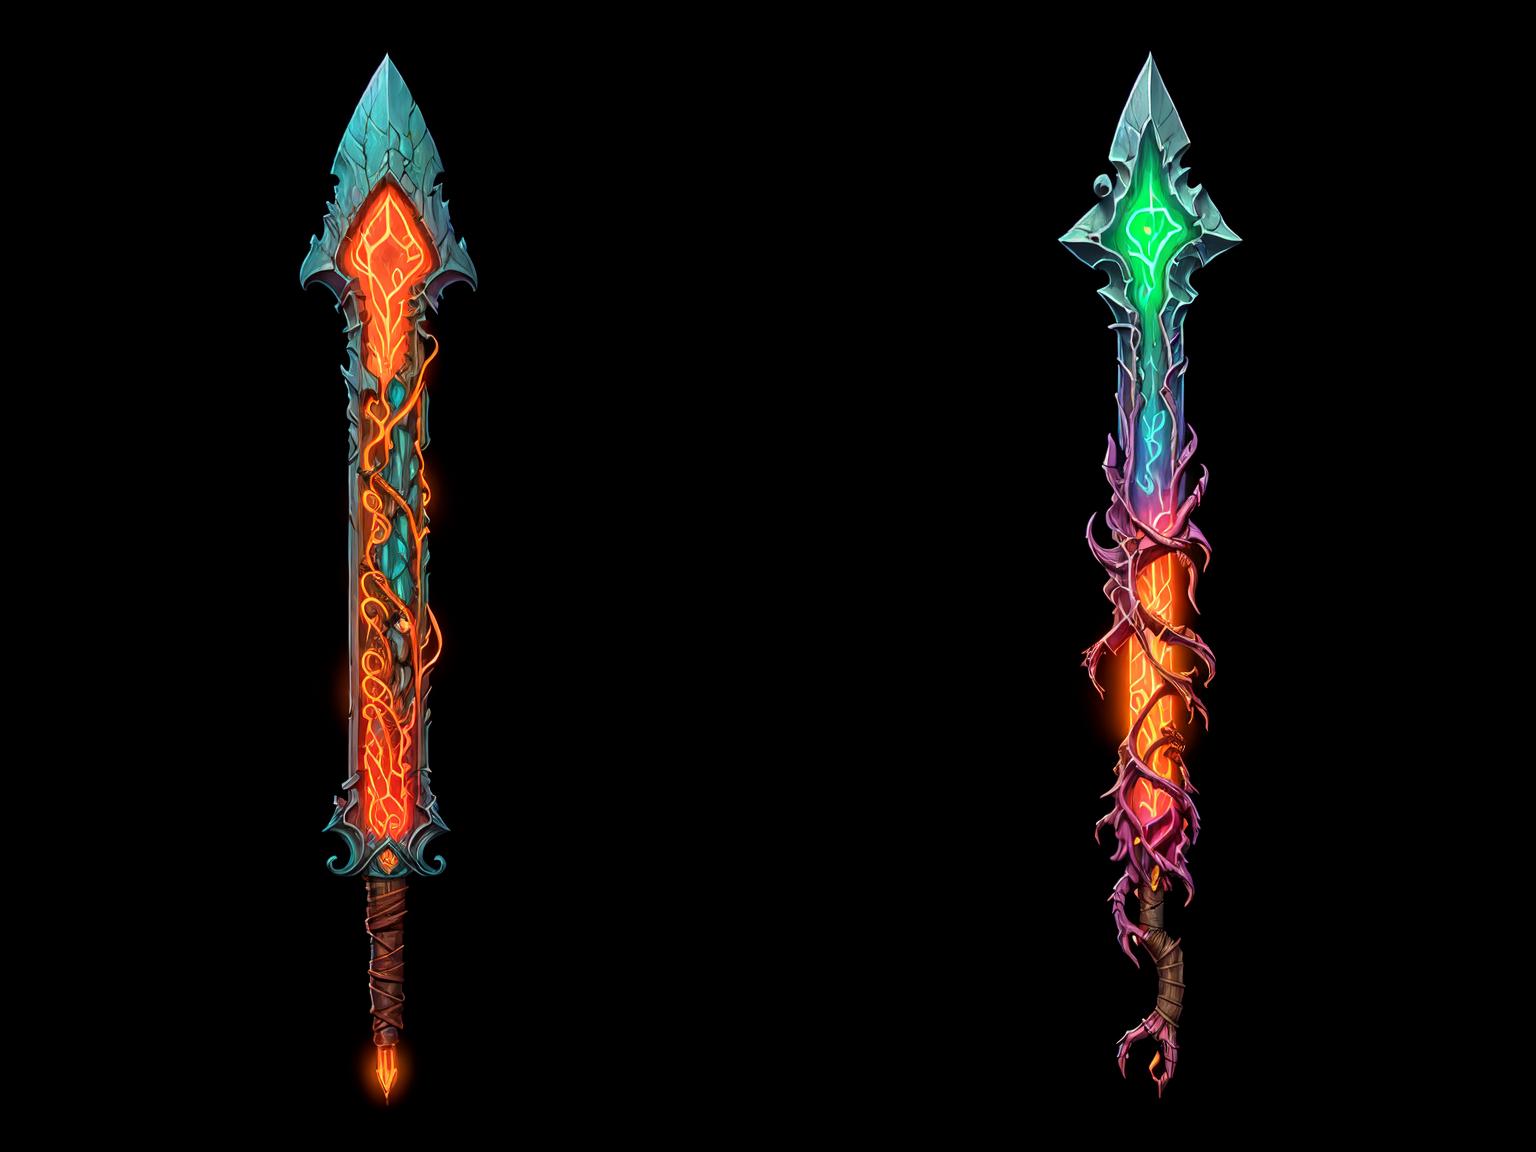 Pecha Swords Generator image by Thaomas